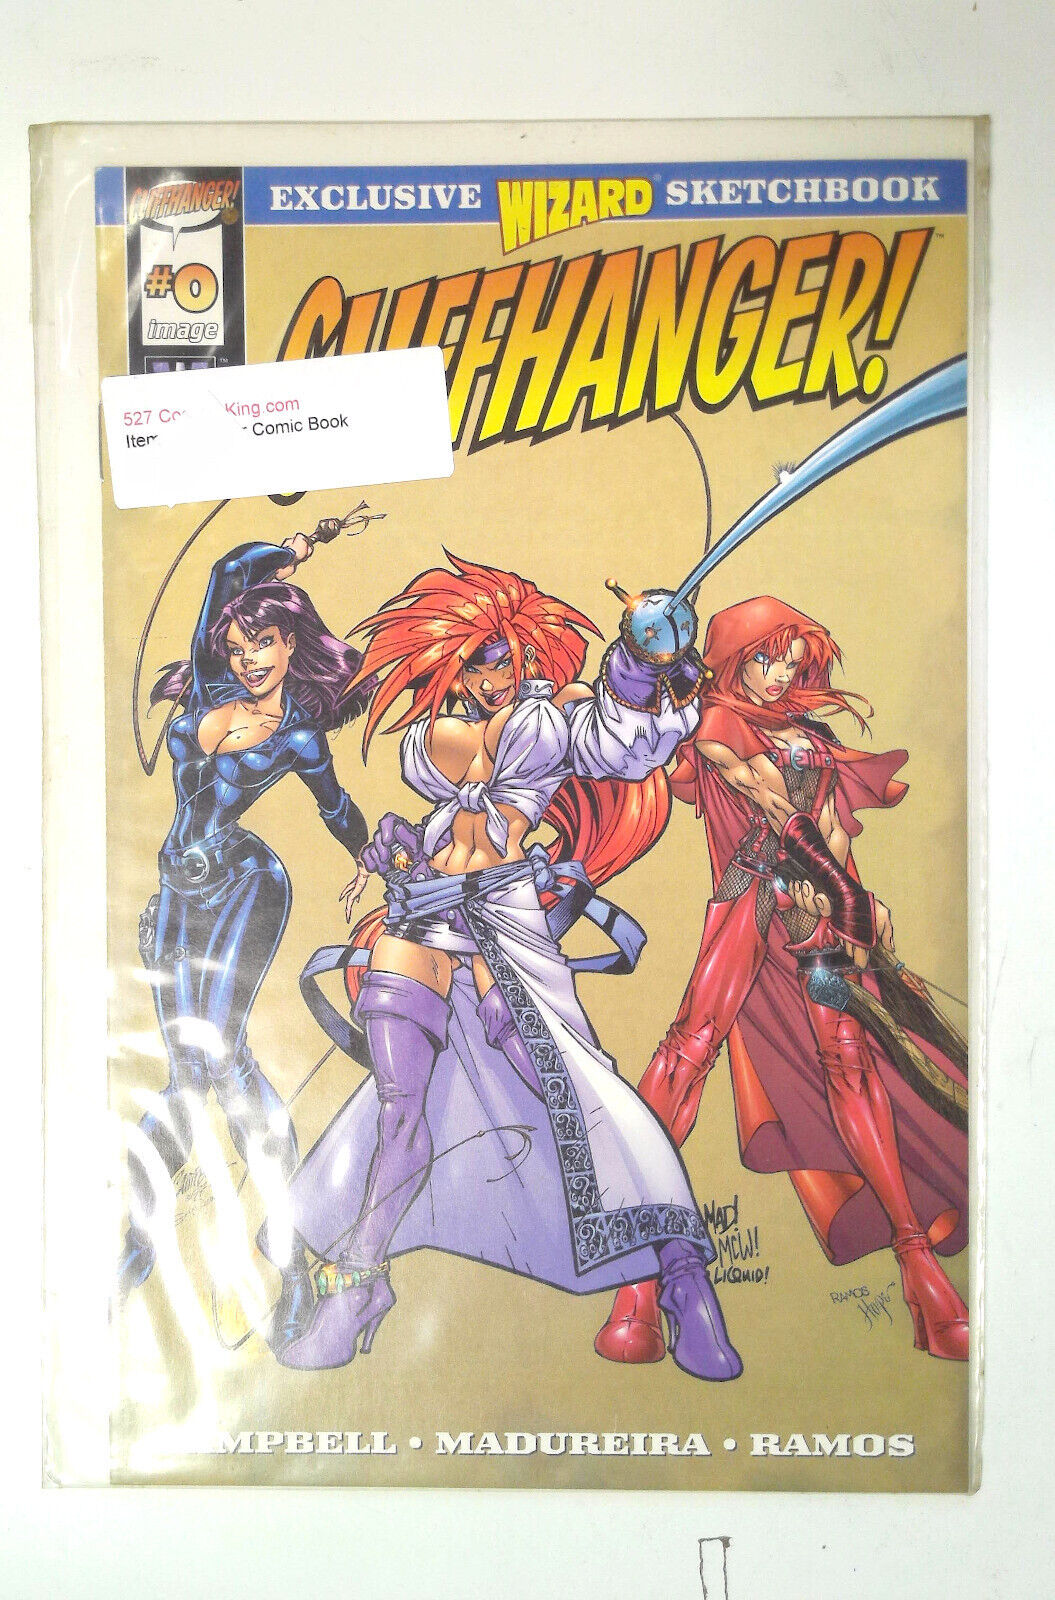 1997 Cliffhanger Wizard Sketchbook #0 Image Comics VF/NM 1st Print Comic Book